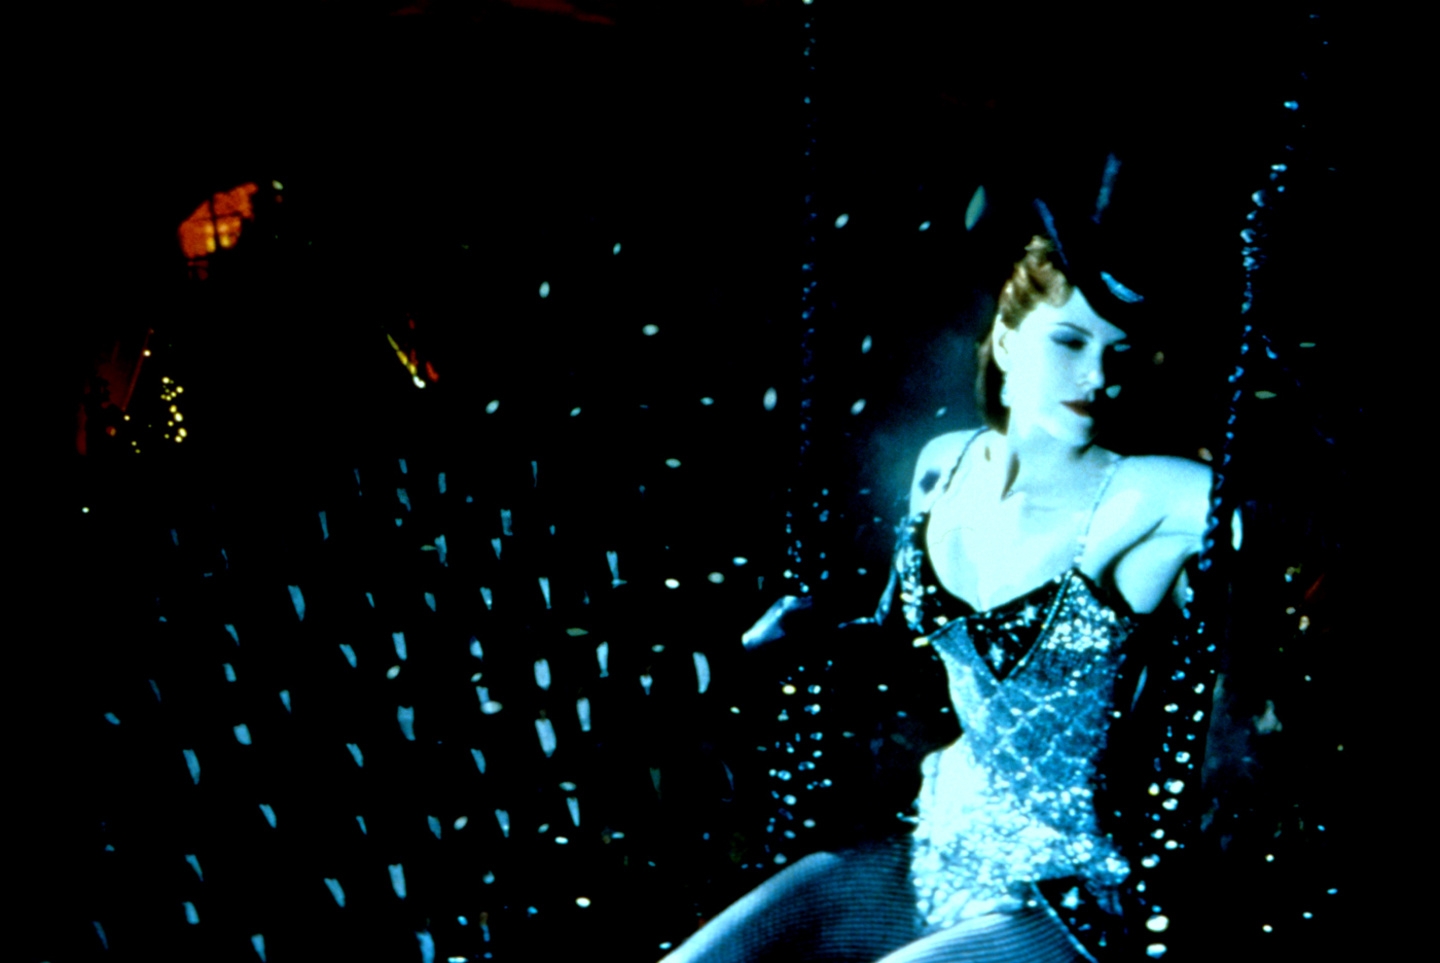 Moulin rouge / Nicole Kidman